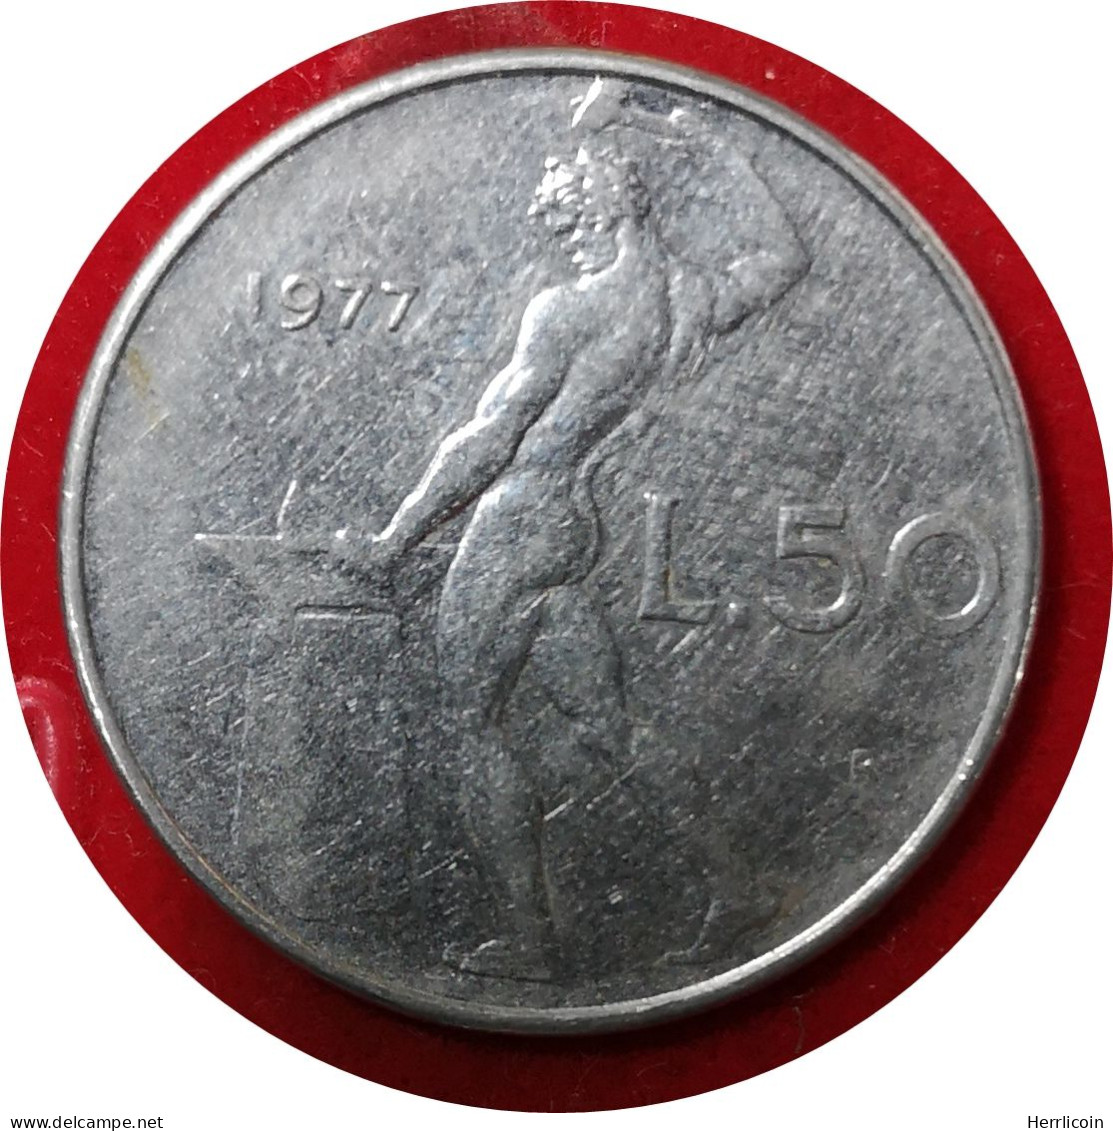 Monnaie Italie - 1977 - 50 Lire Grand Module - 50 Lire